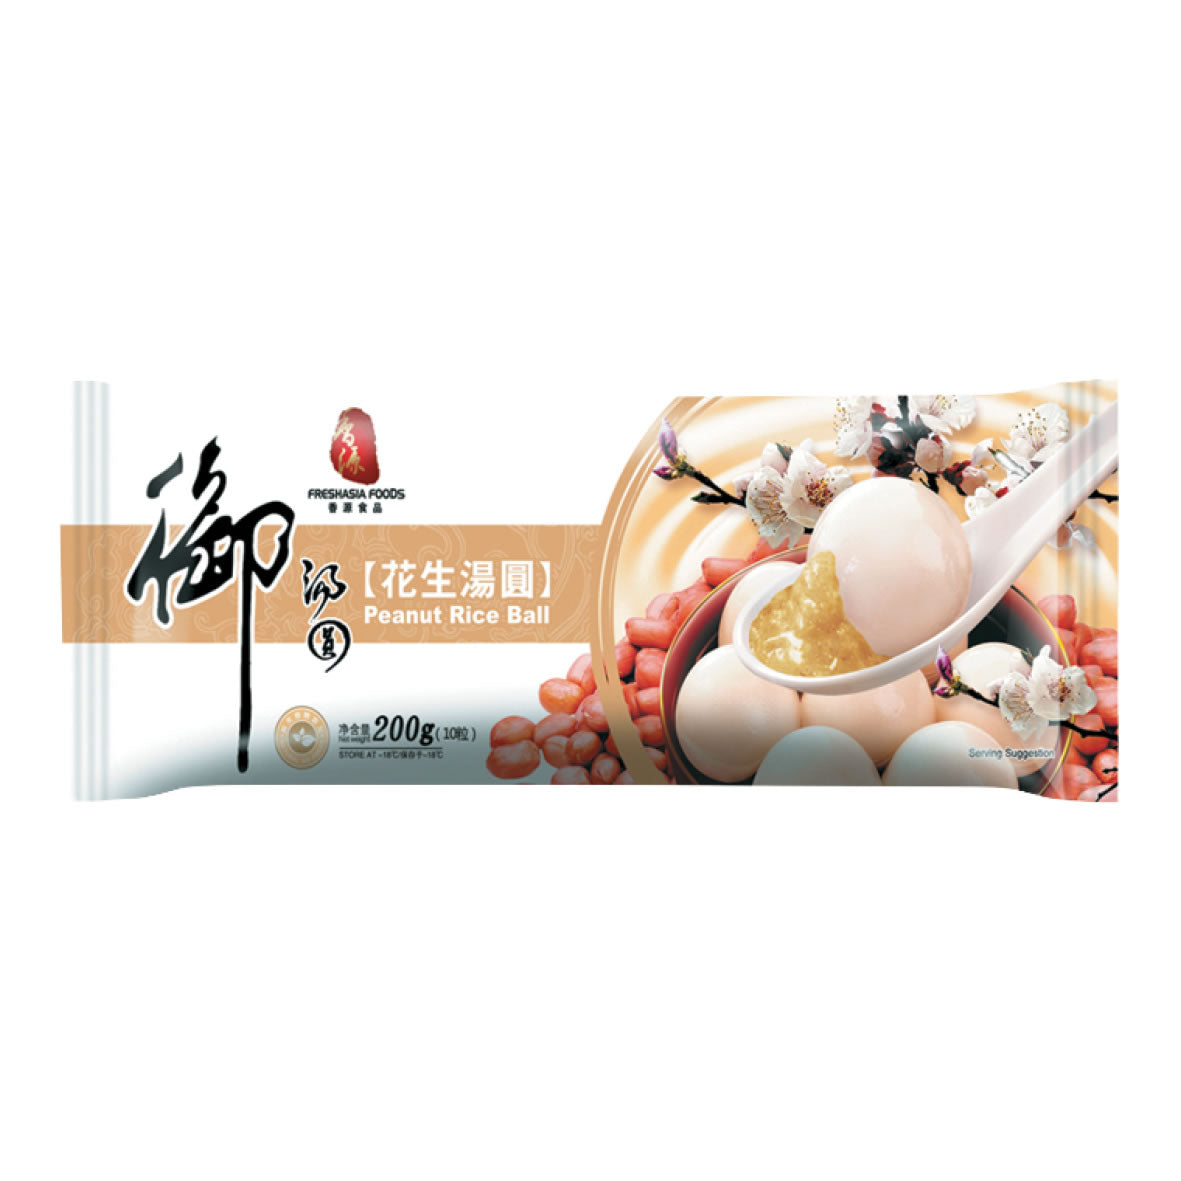 Freshasia Peanut Rice Ball 200g ~ 香源 花生汤圆 200g